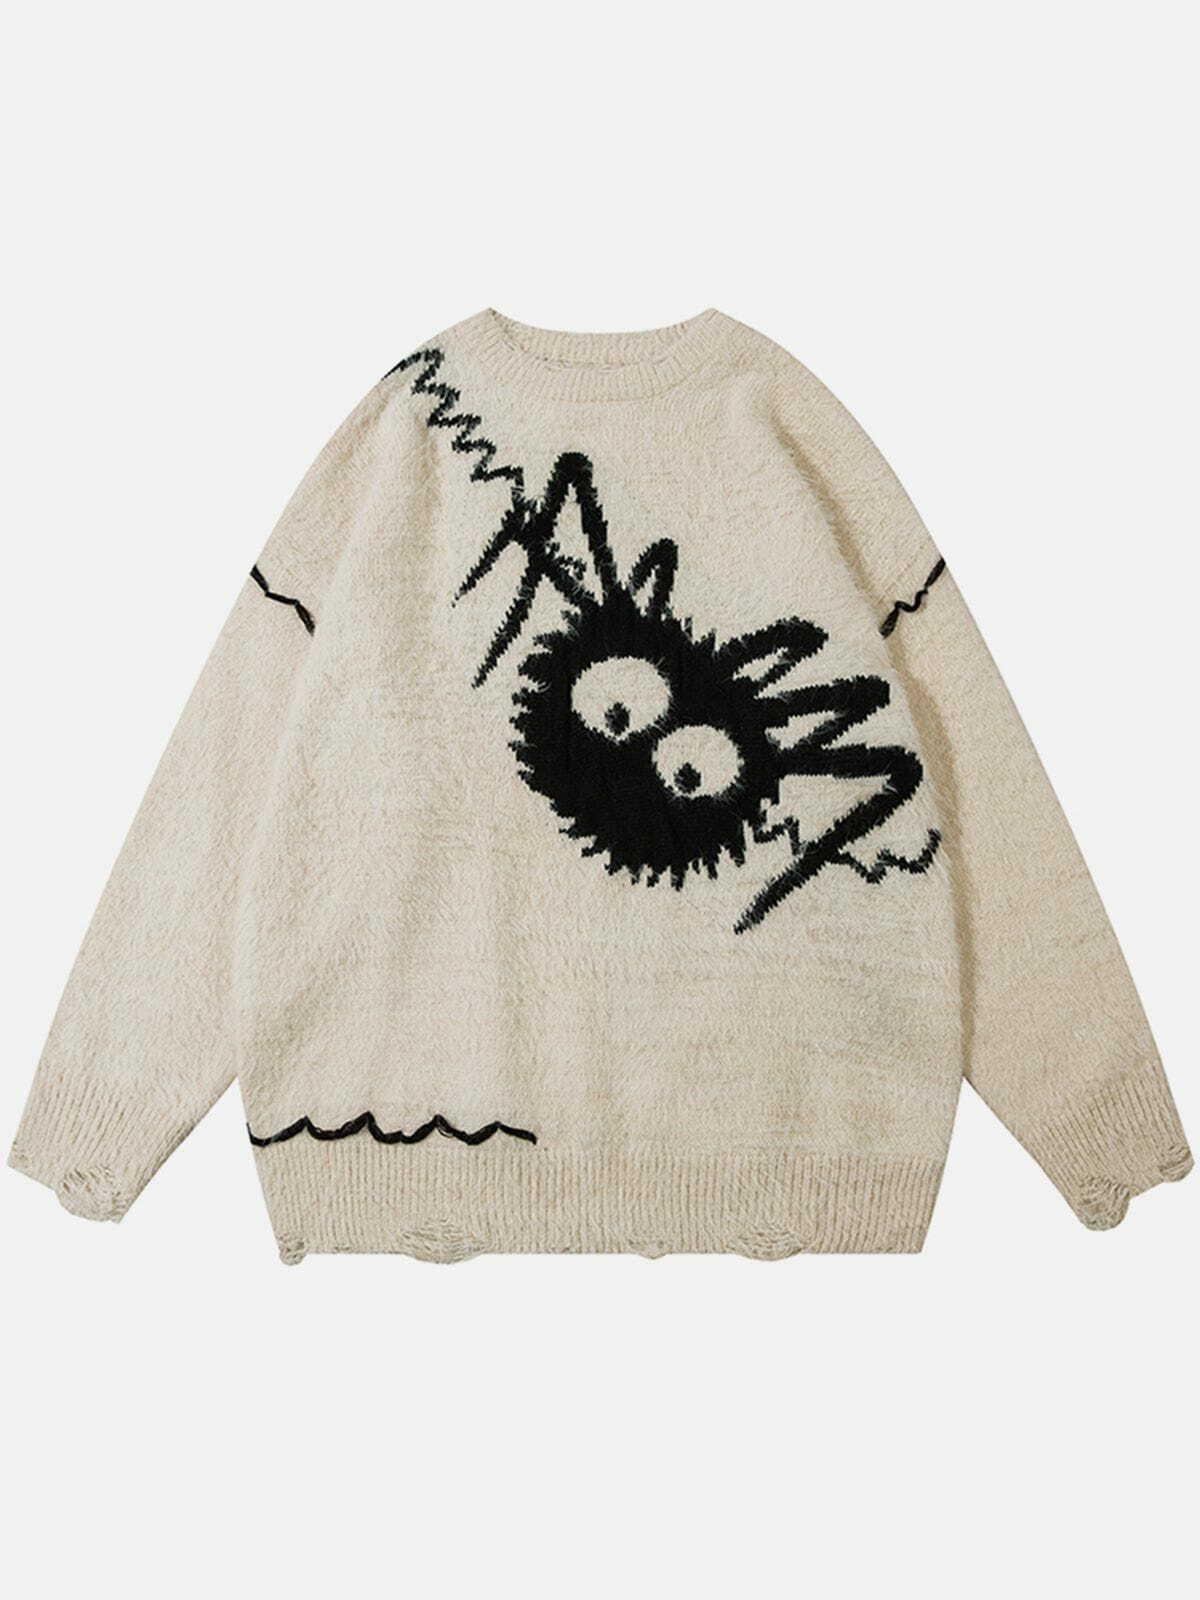 retro spider pattern sweater edgy & vibrant streetwear 8208